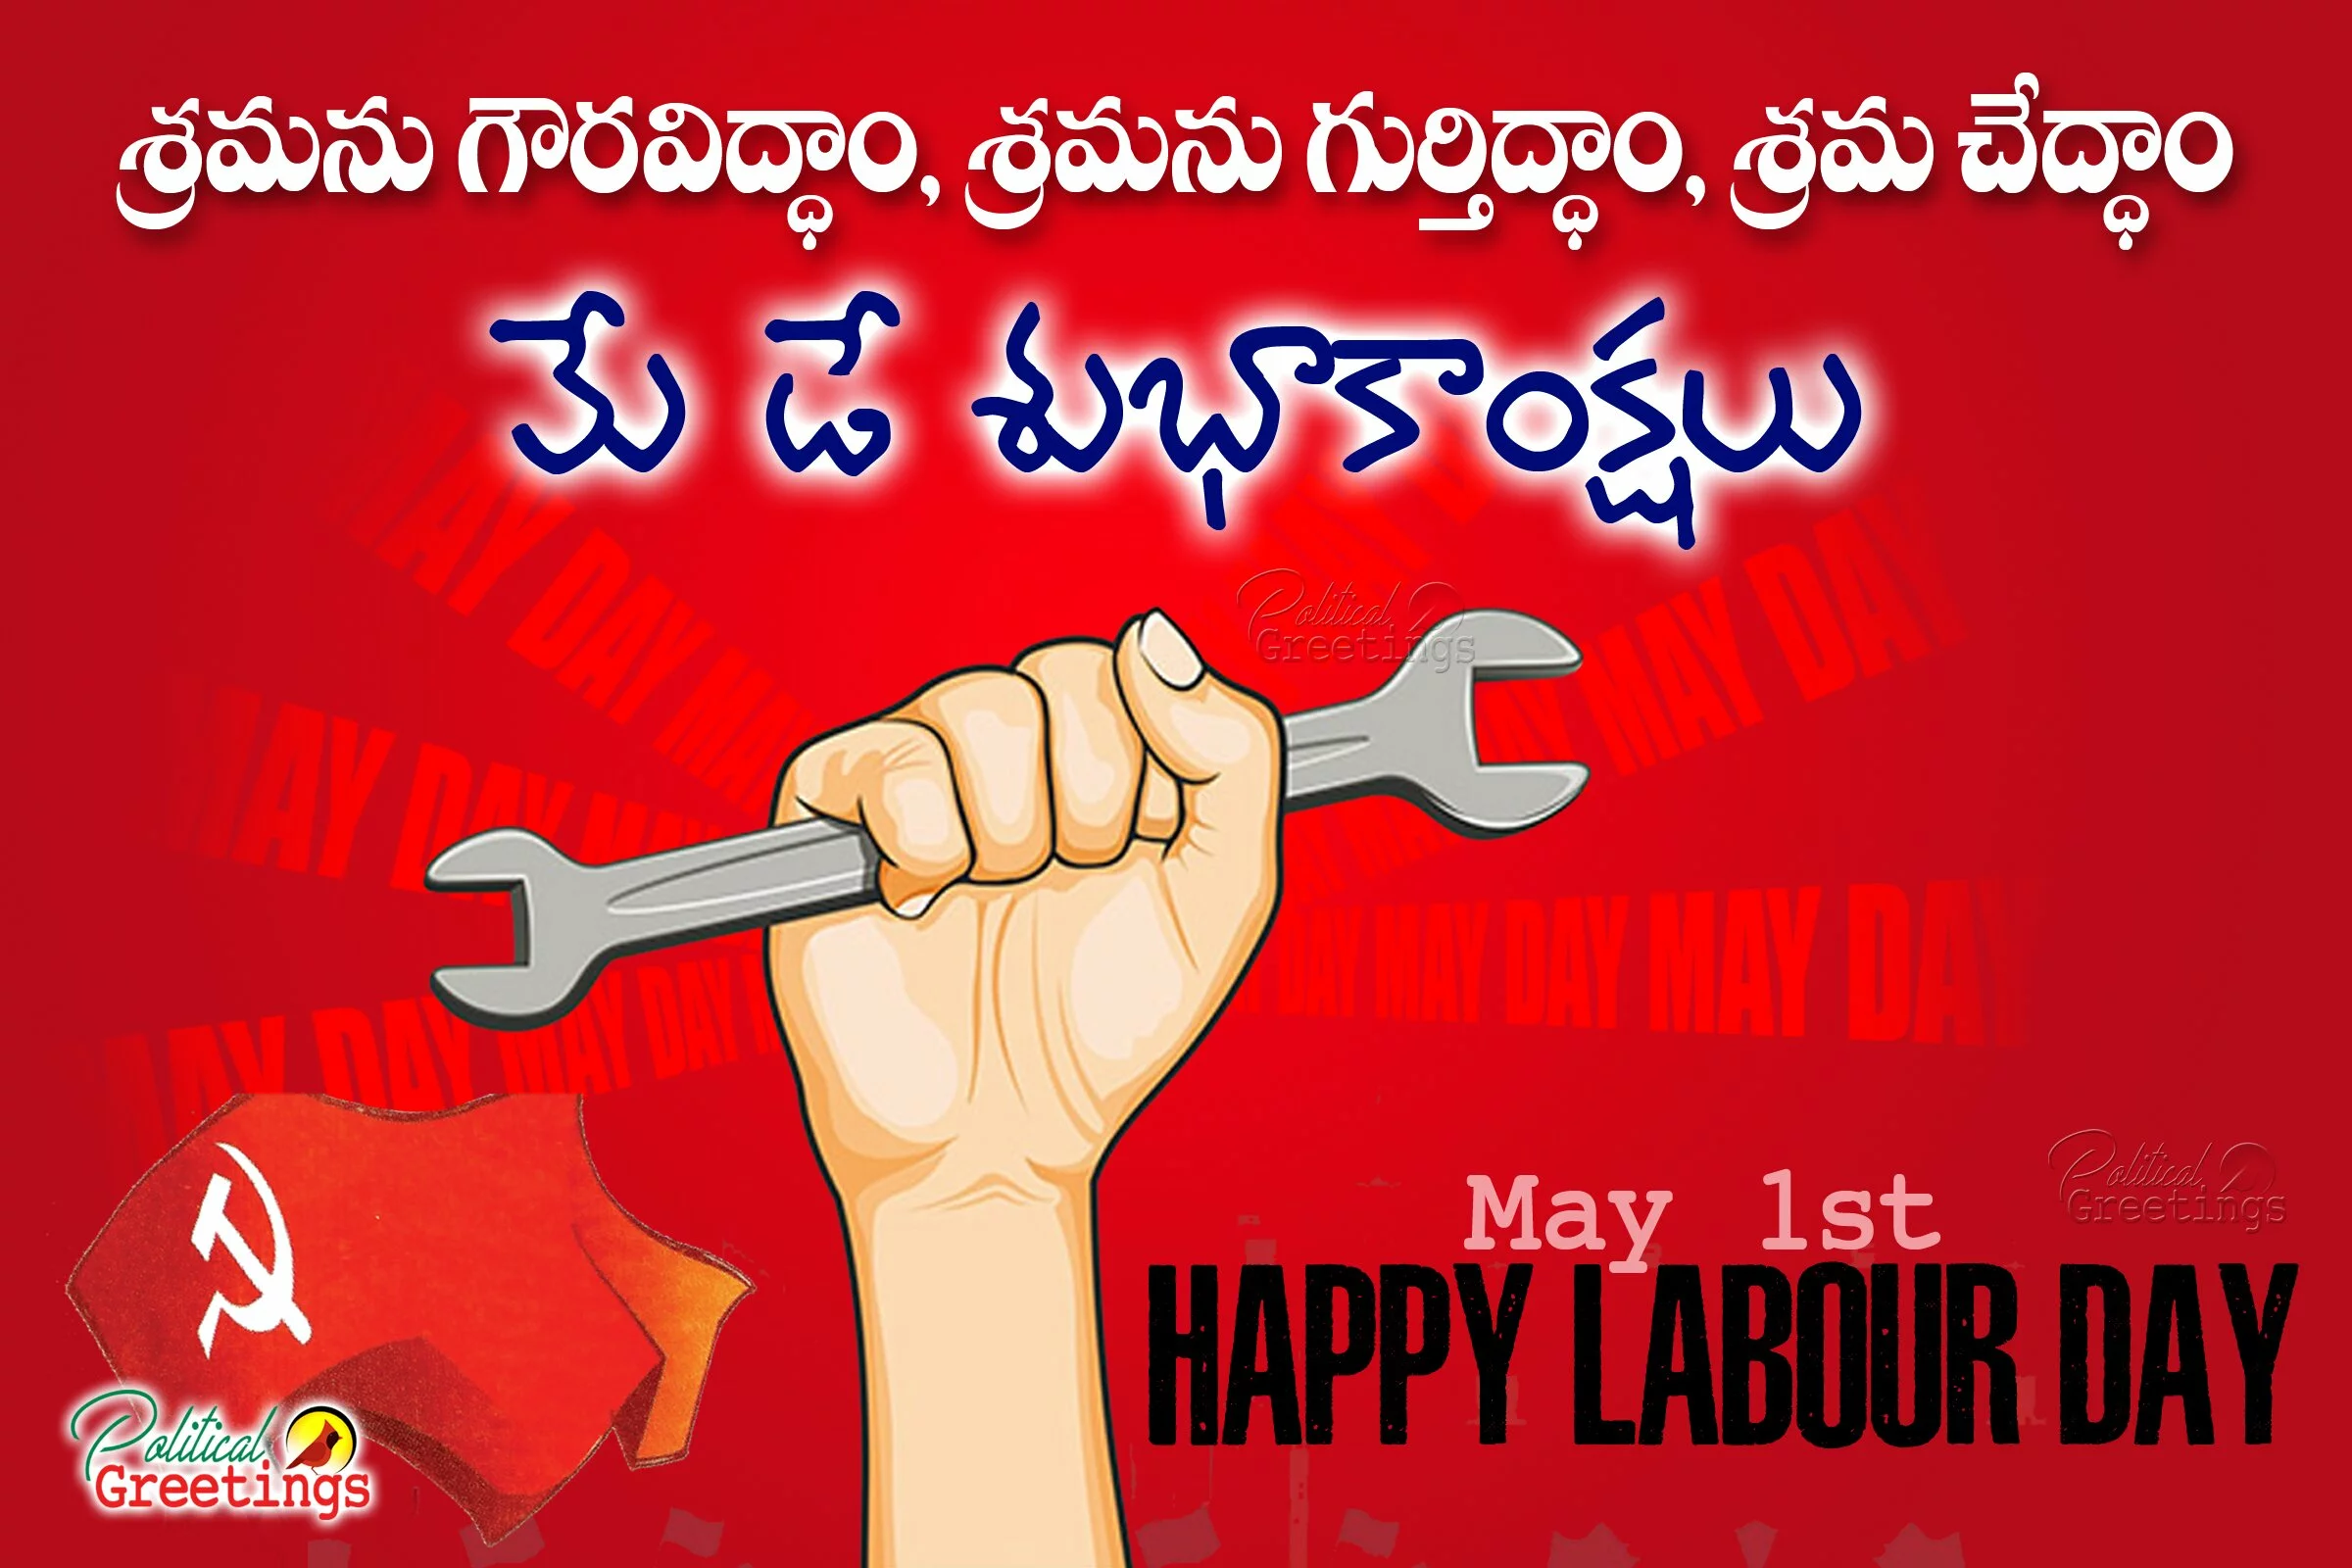 Top Famous Telugu May Day Wishes in Telugu Language, May Day Subhakankshalu Wallpapers online